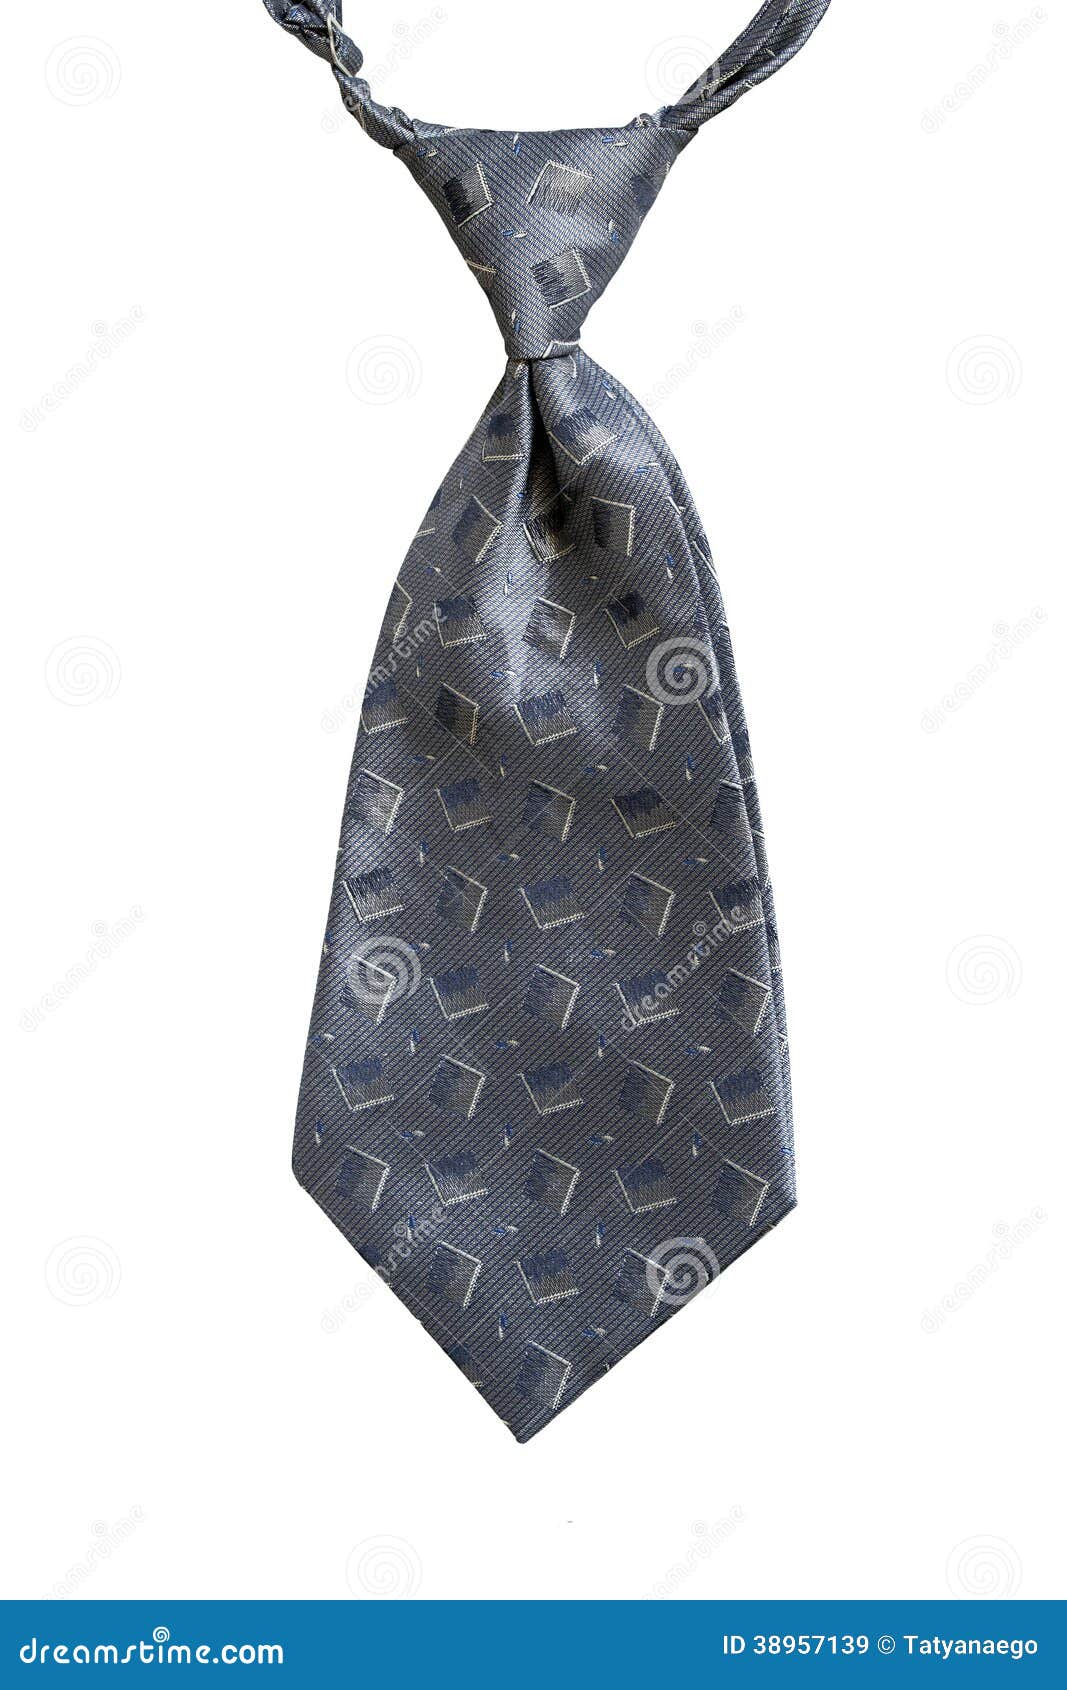 Short tie stock image. Image of elegant, model, knot - 38957139